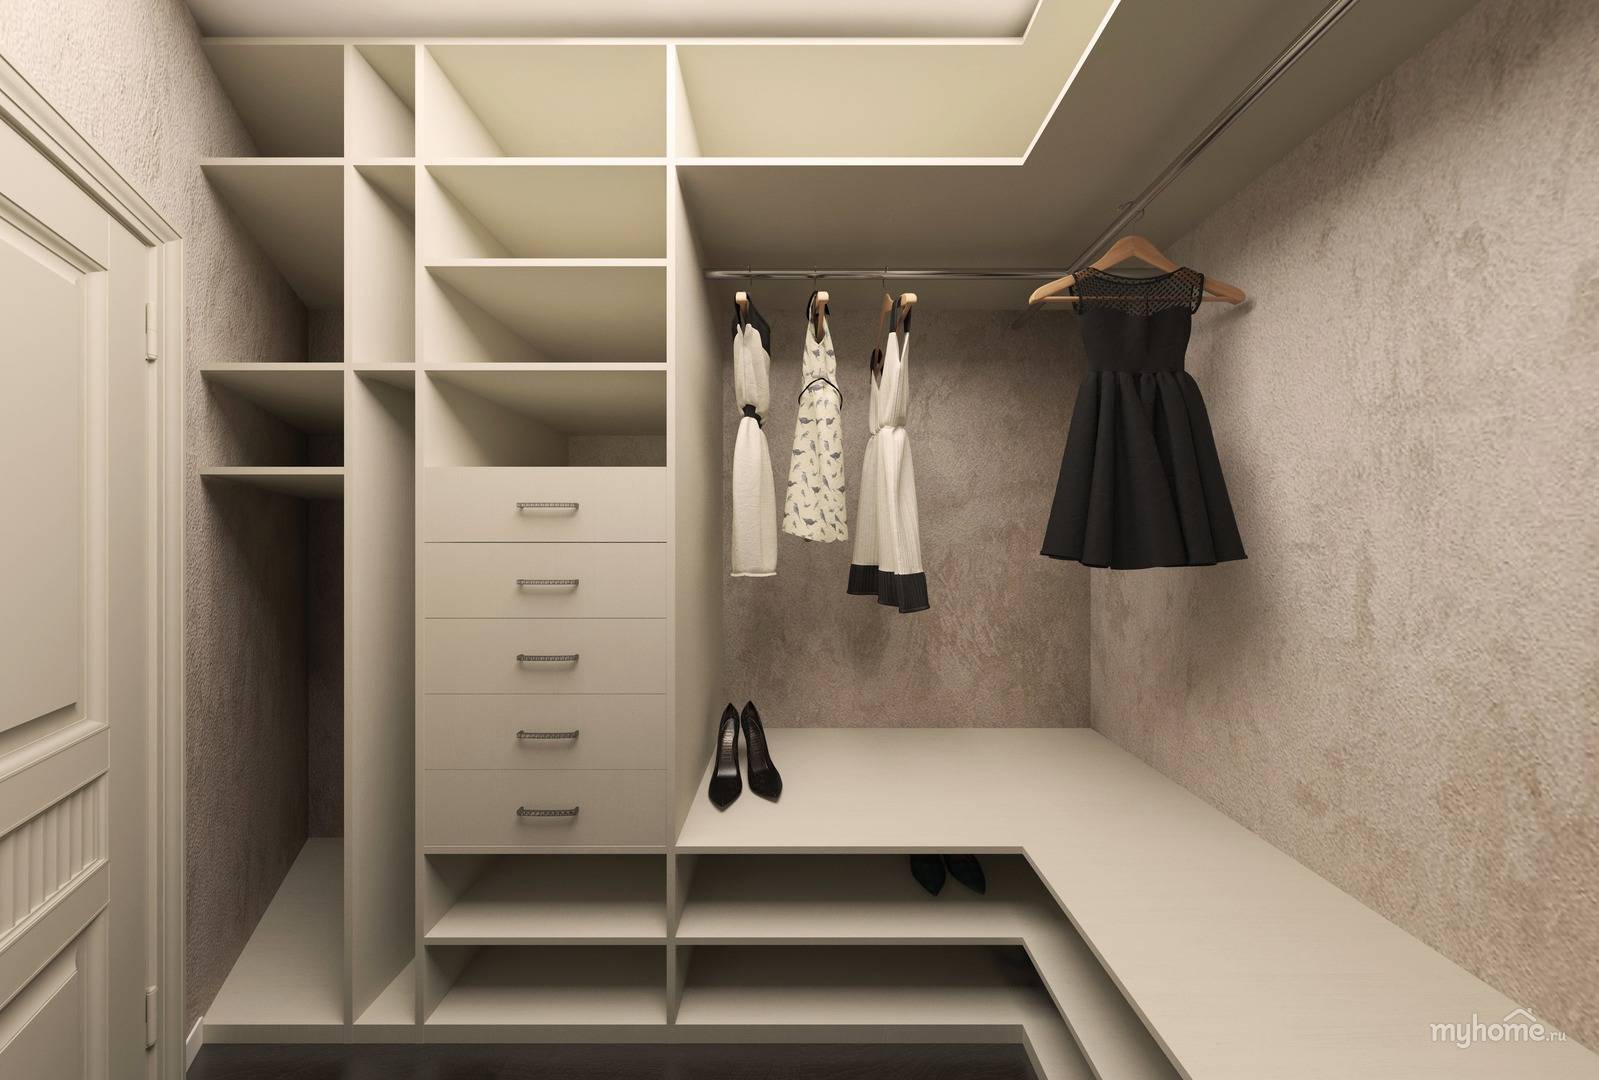 гардеробная комната планировка с размерами 2х1